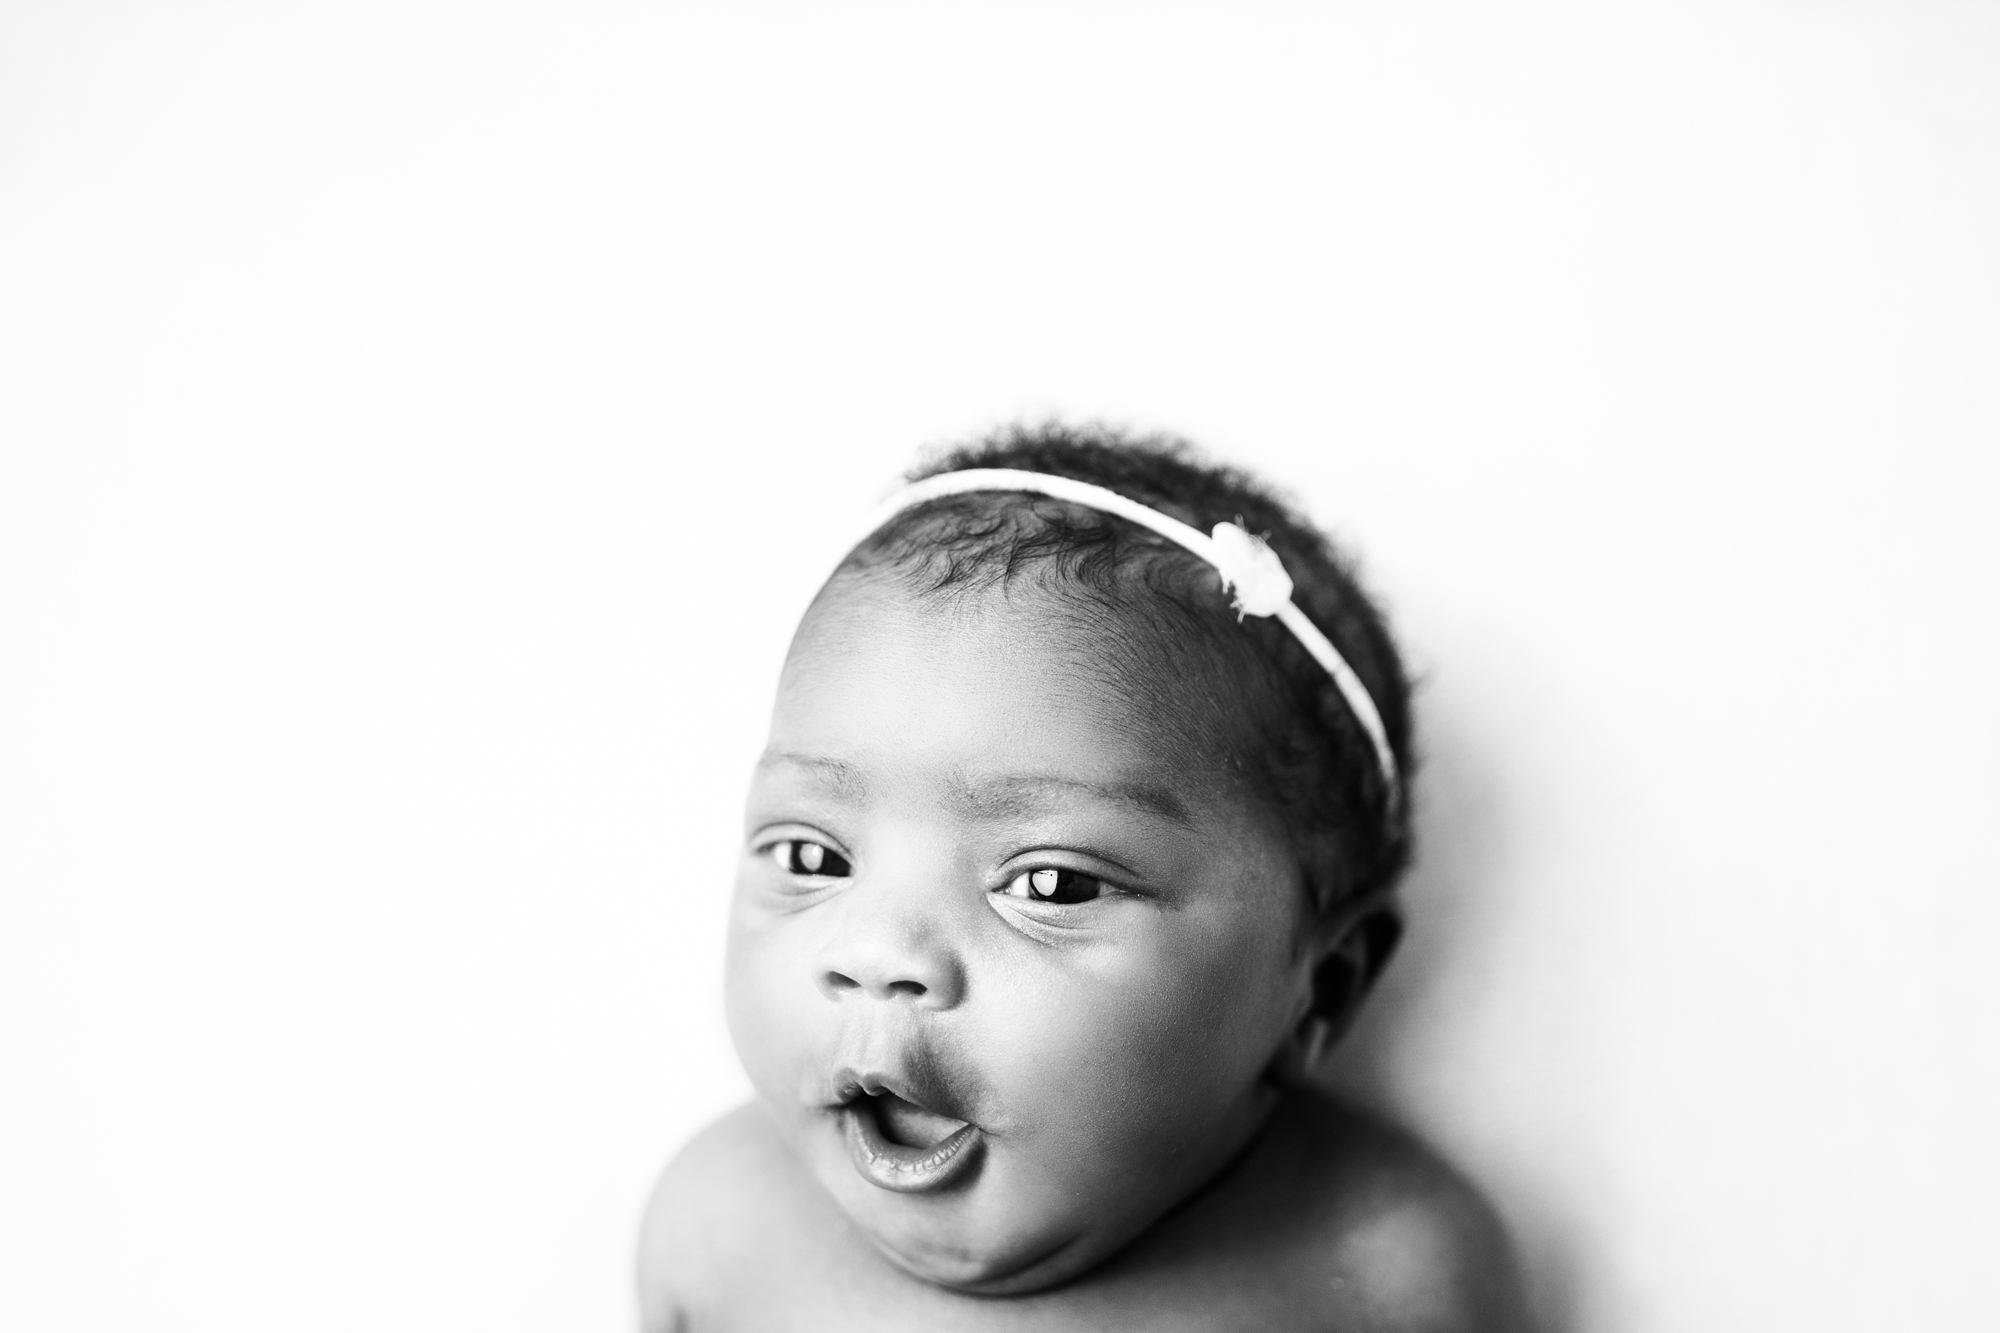 awake black and white image of baby looking at camera smiling